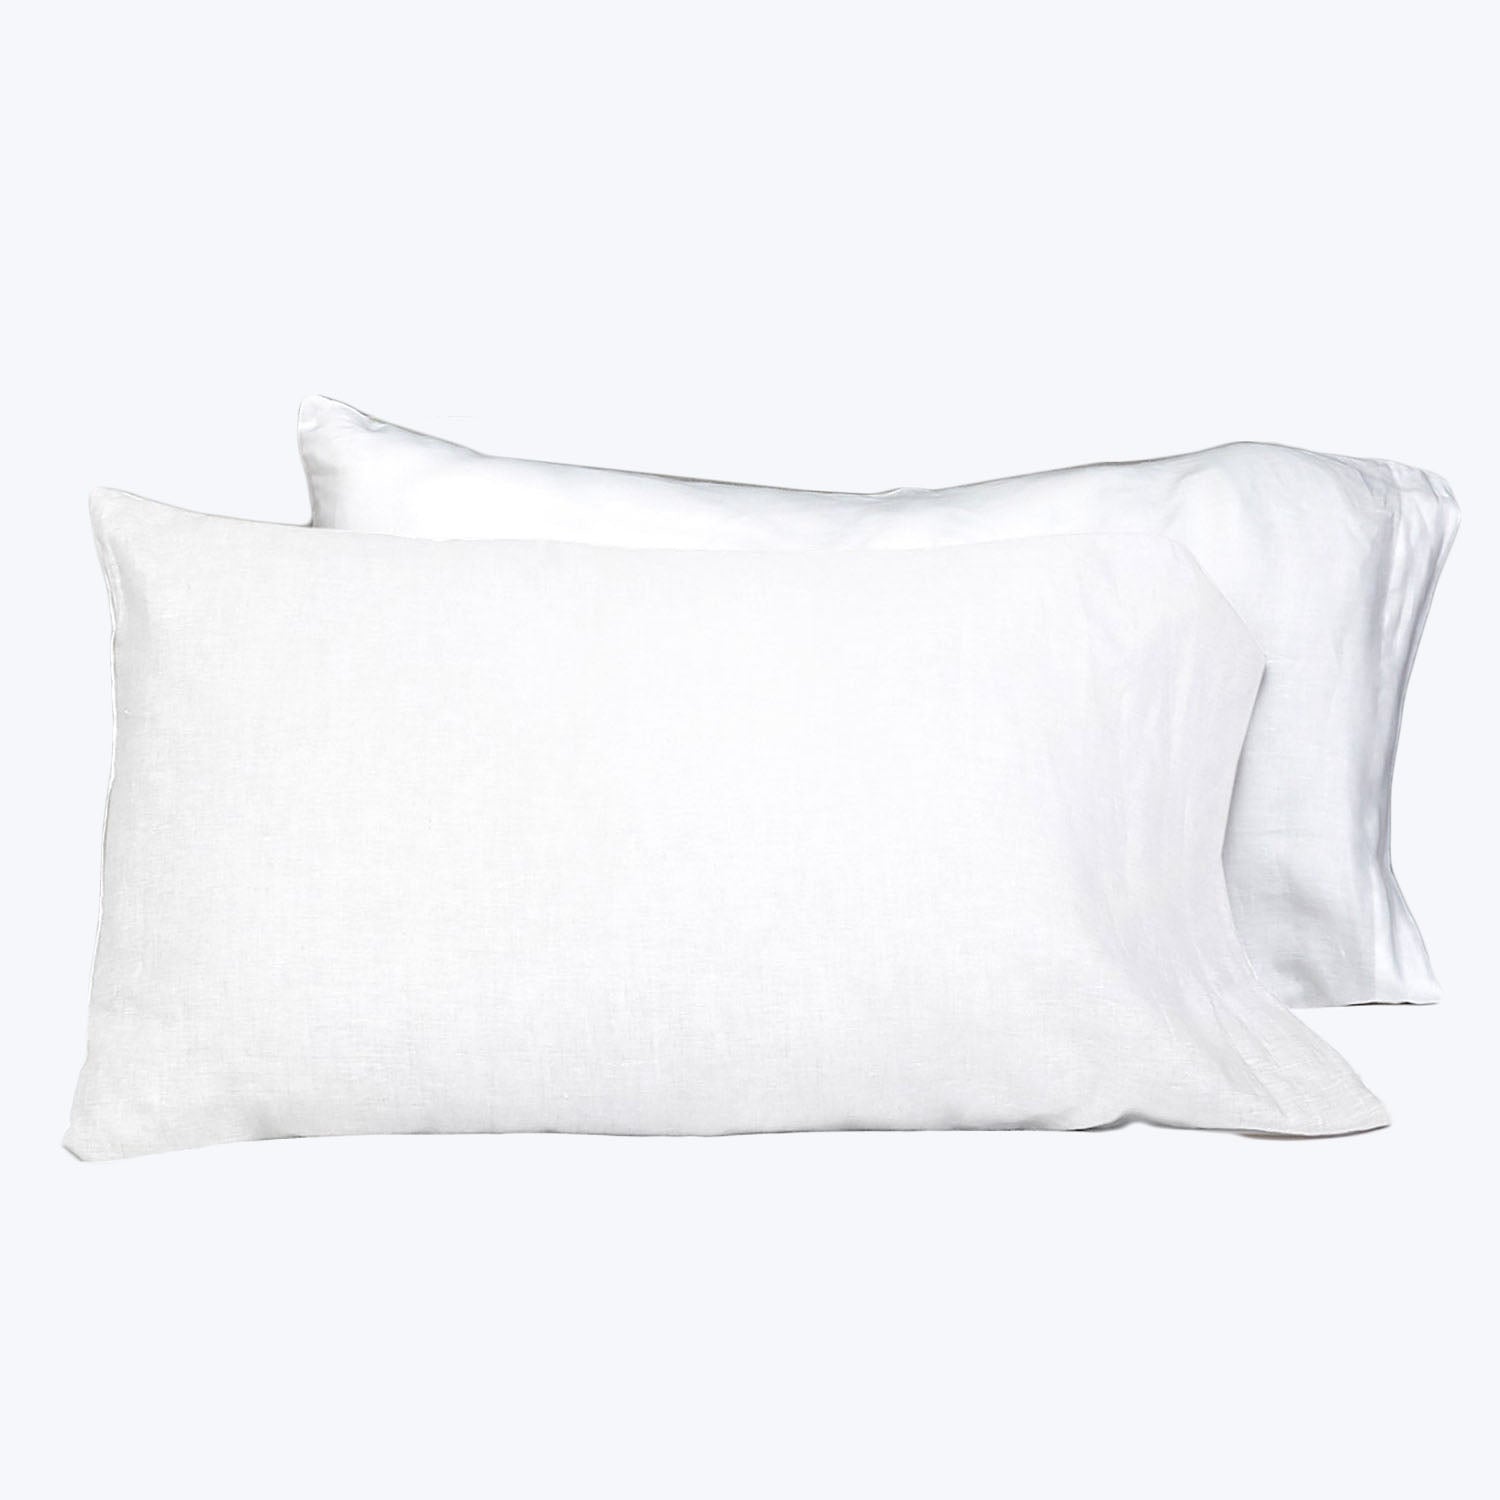 Donatella Sheets & Pillowcases, White Pillowcase Pair / Standard